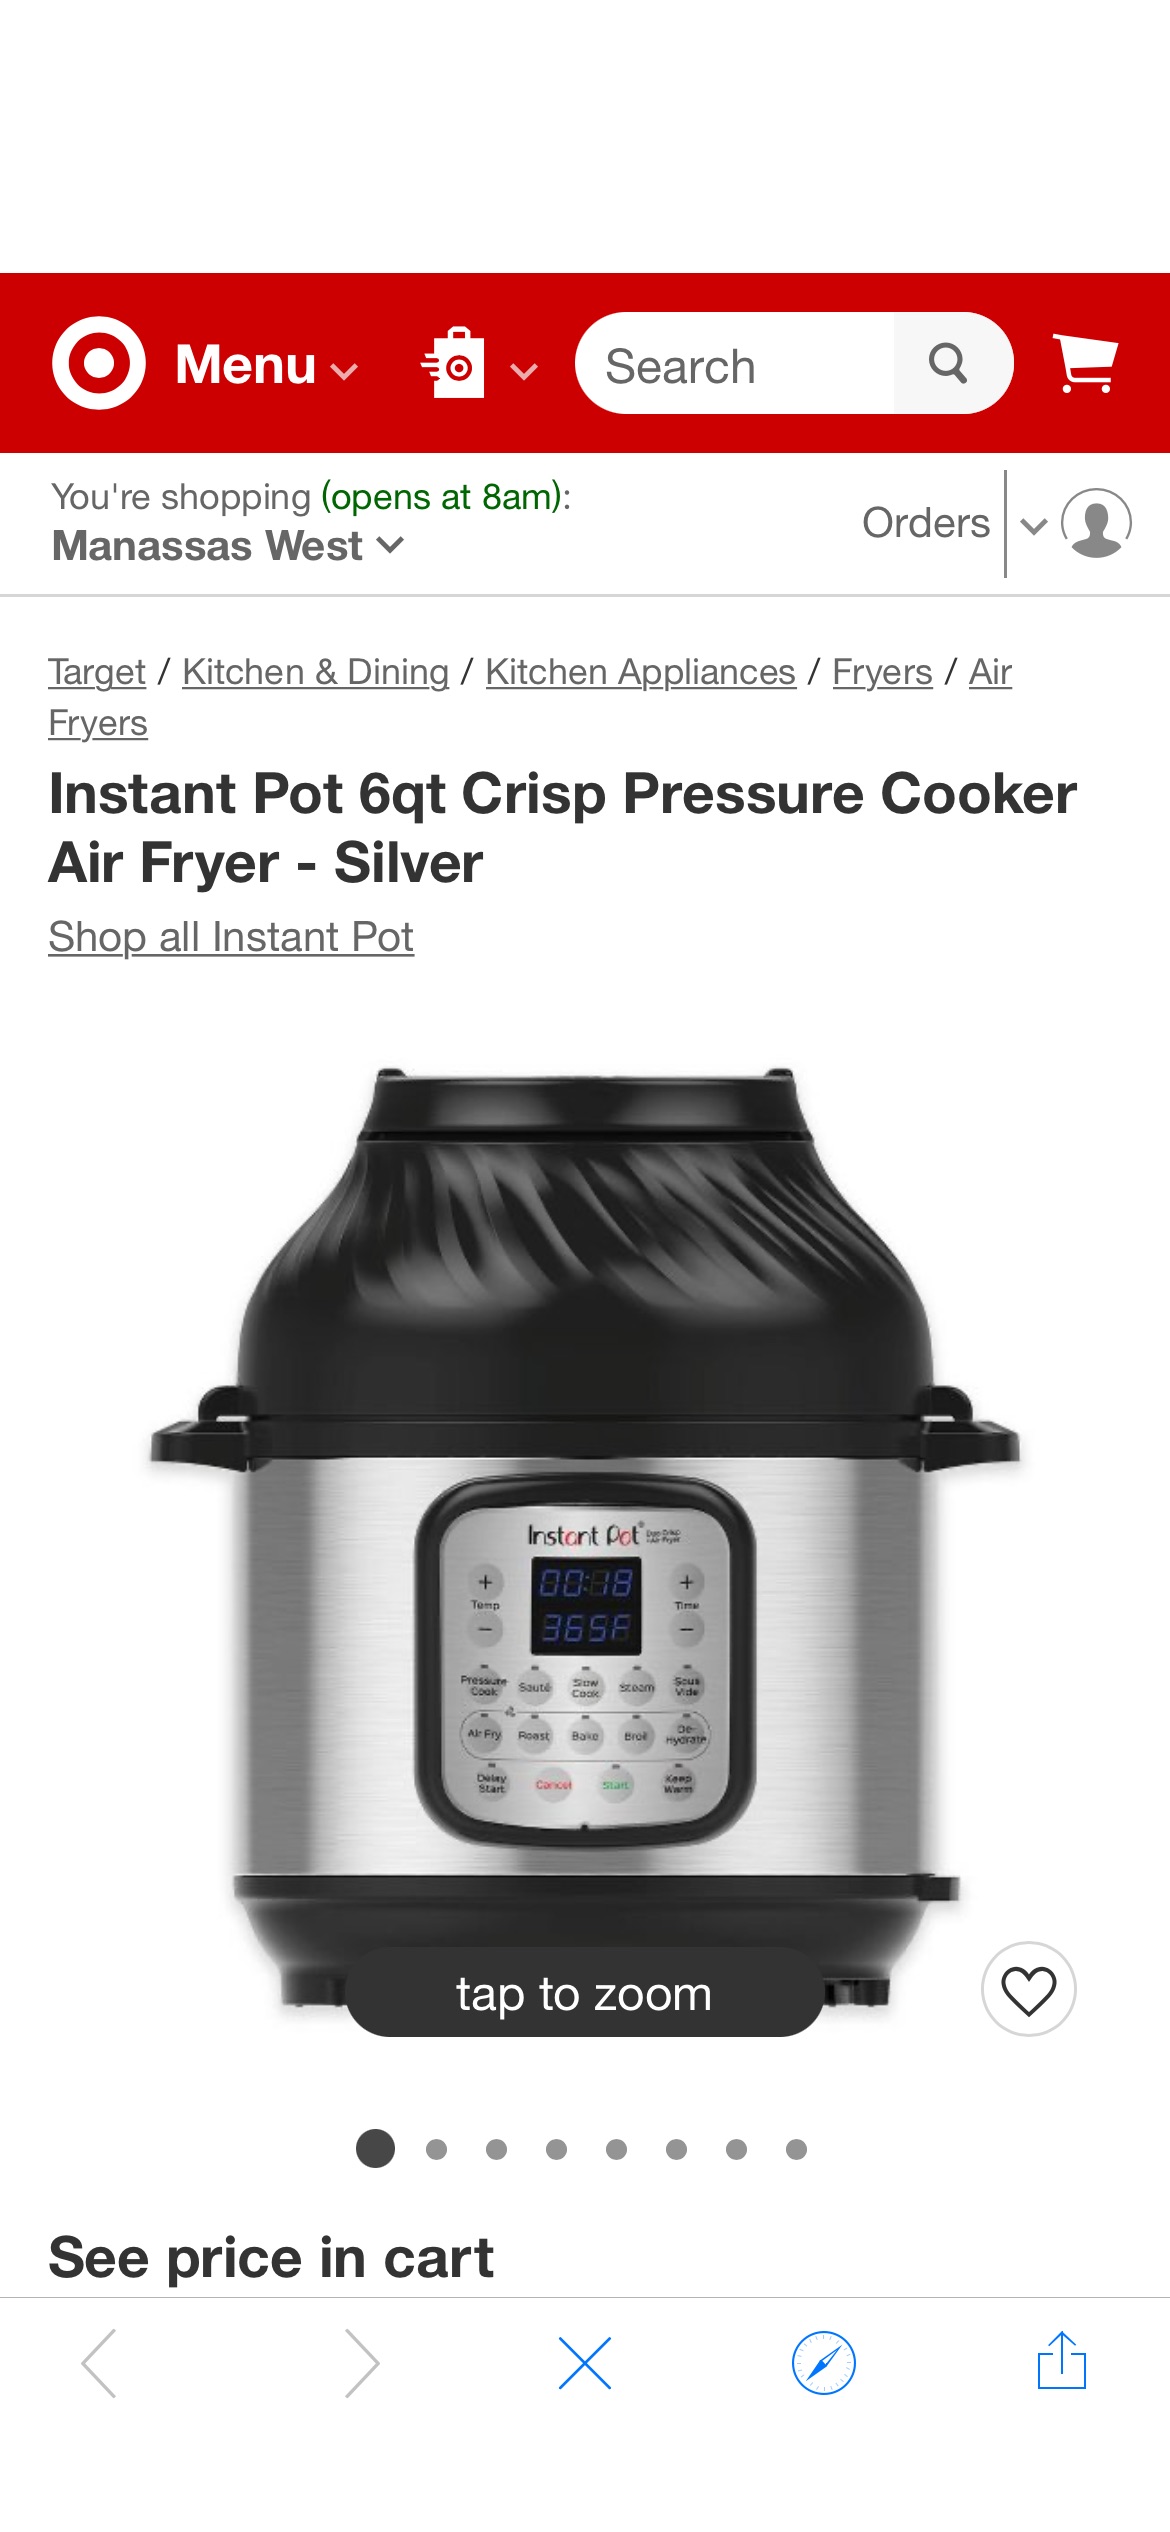 Instant Pot 6qt Crisp Pressure Cooker Air Fryer - Silver : Target
高压锅加空气炸锅